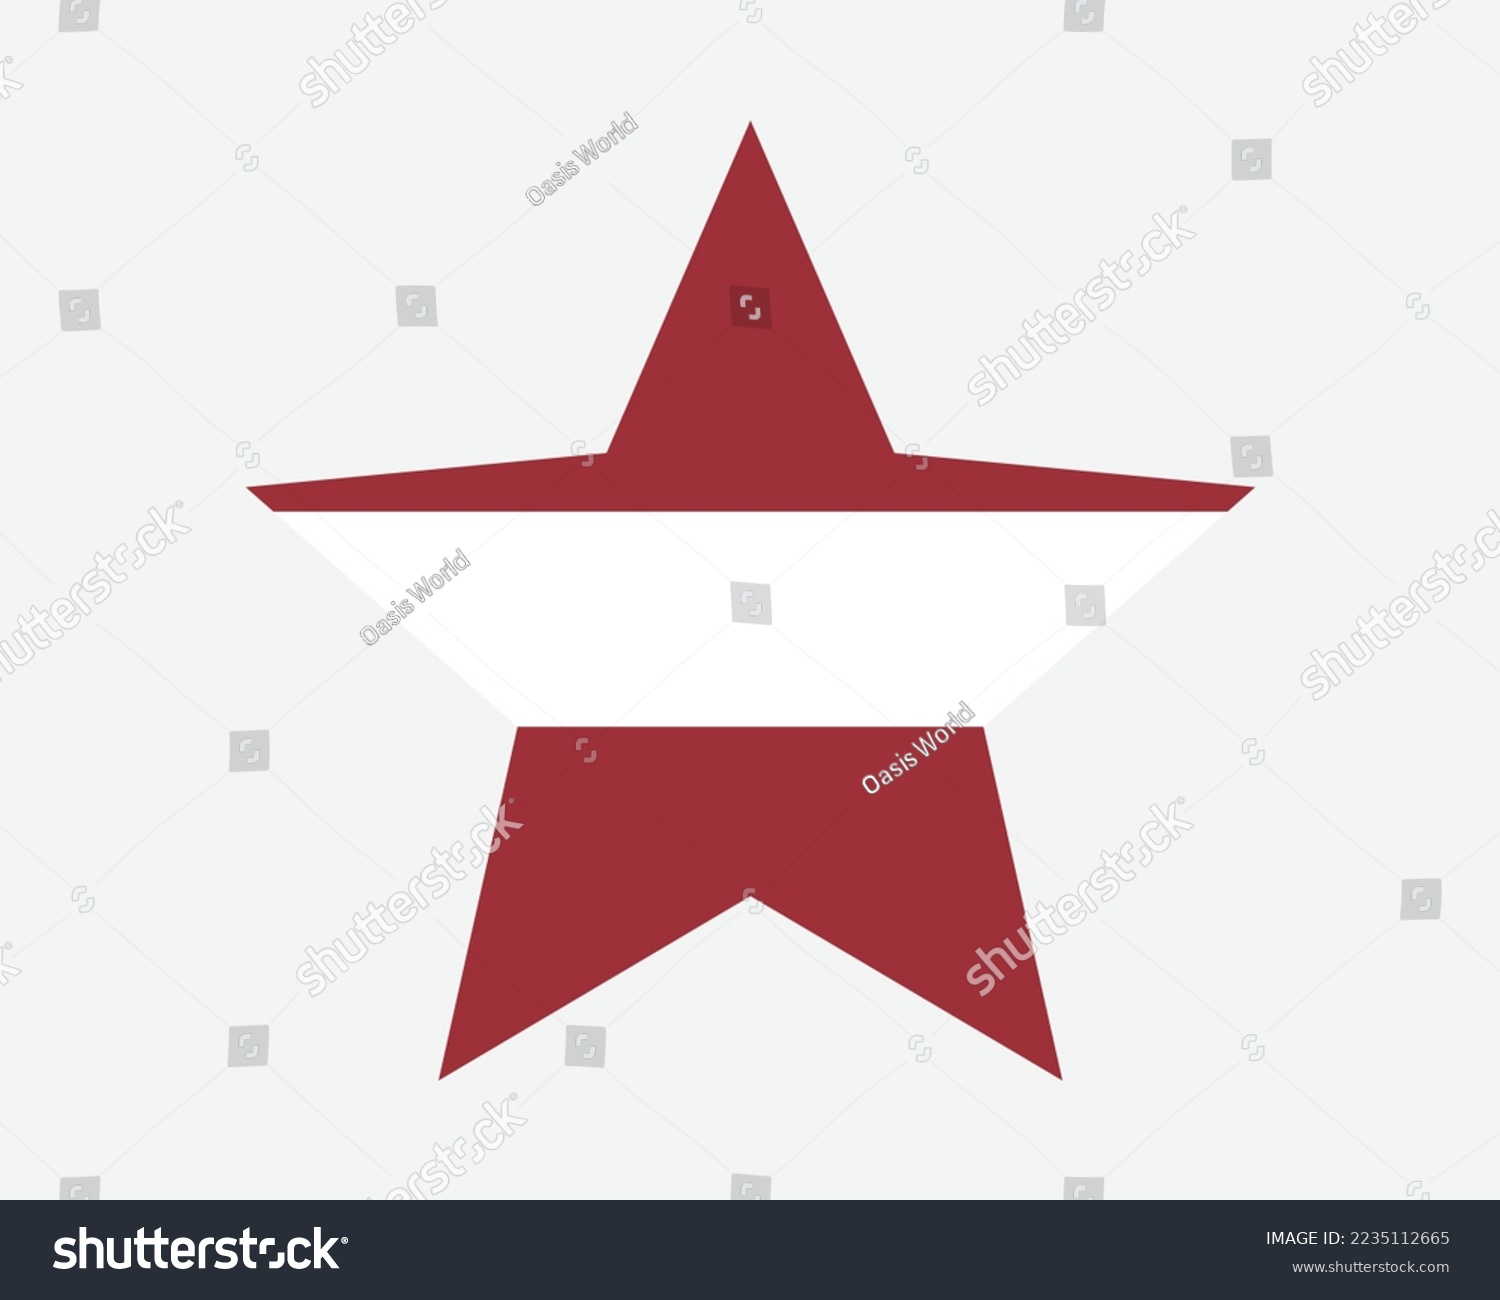 SVG of Latvia Star Flag. Latvian Star Shape Flag. Republic of Latvia Country National Banner Icon Symbol Vector Flat Artwork Graphic Illustration svg